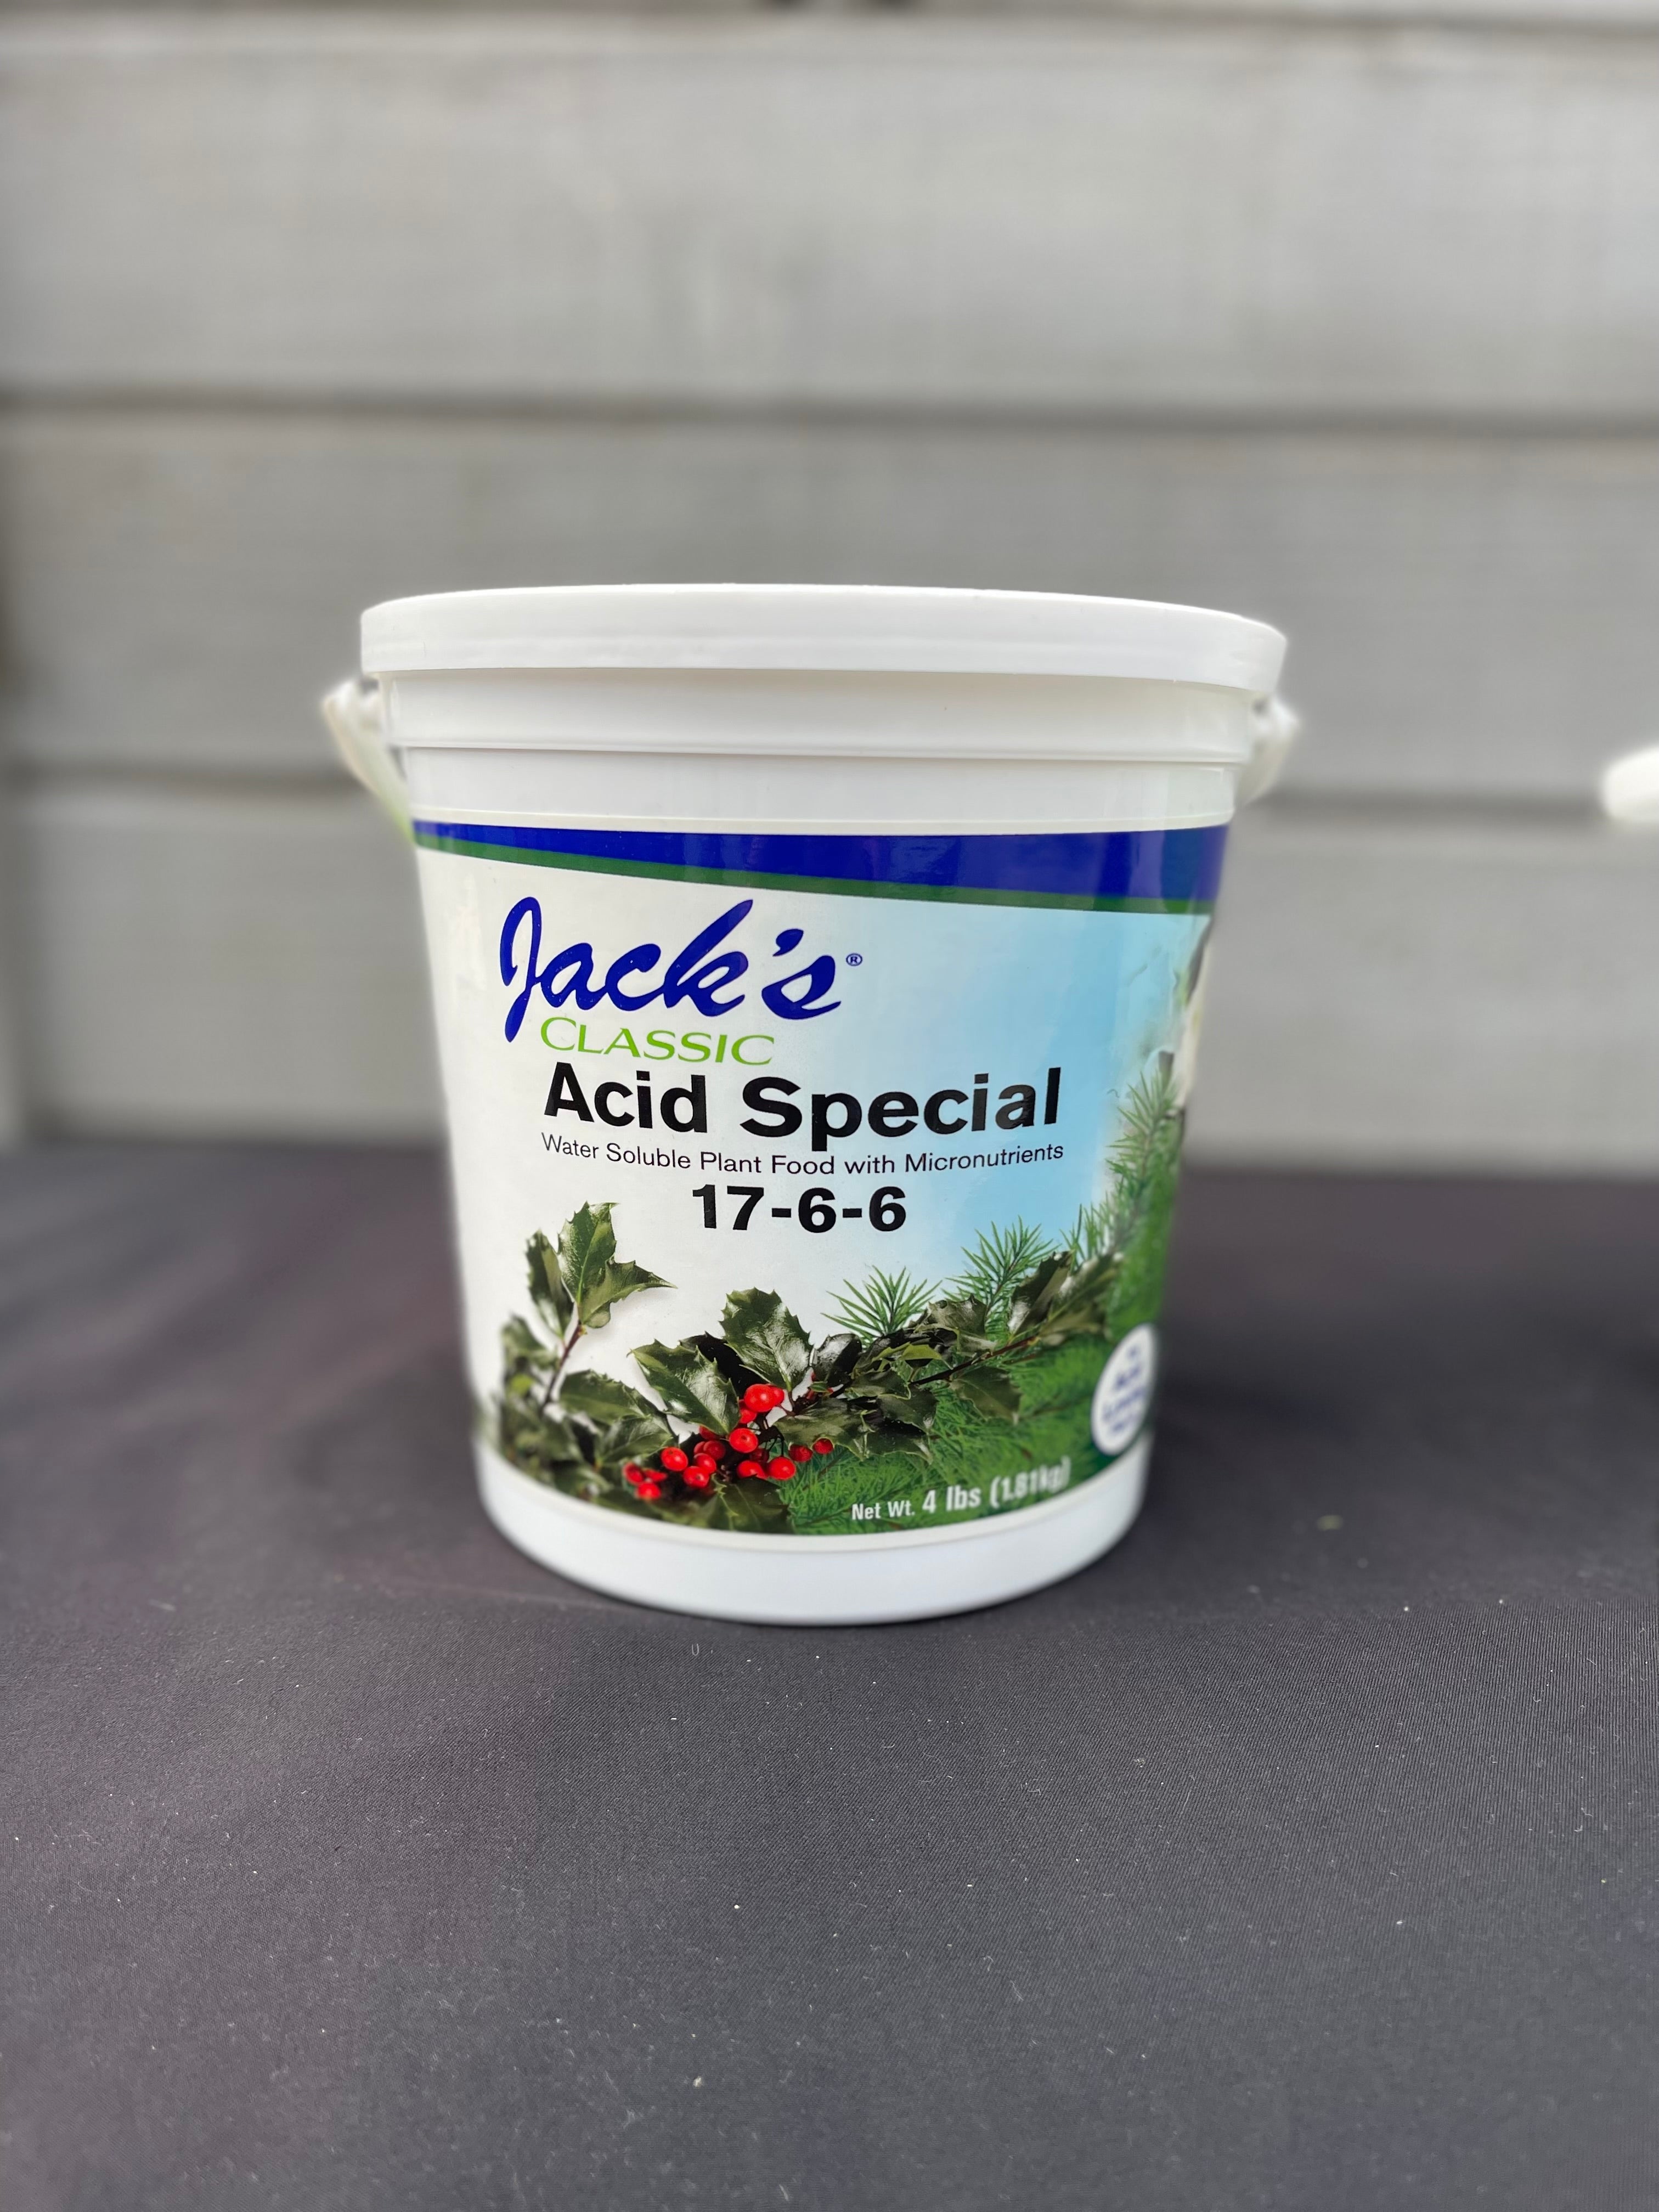 Jack's Classic Acid Special